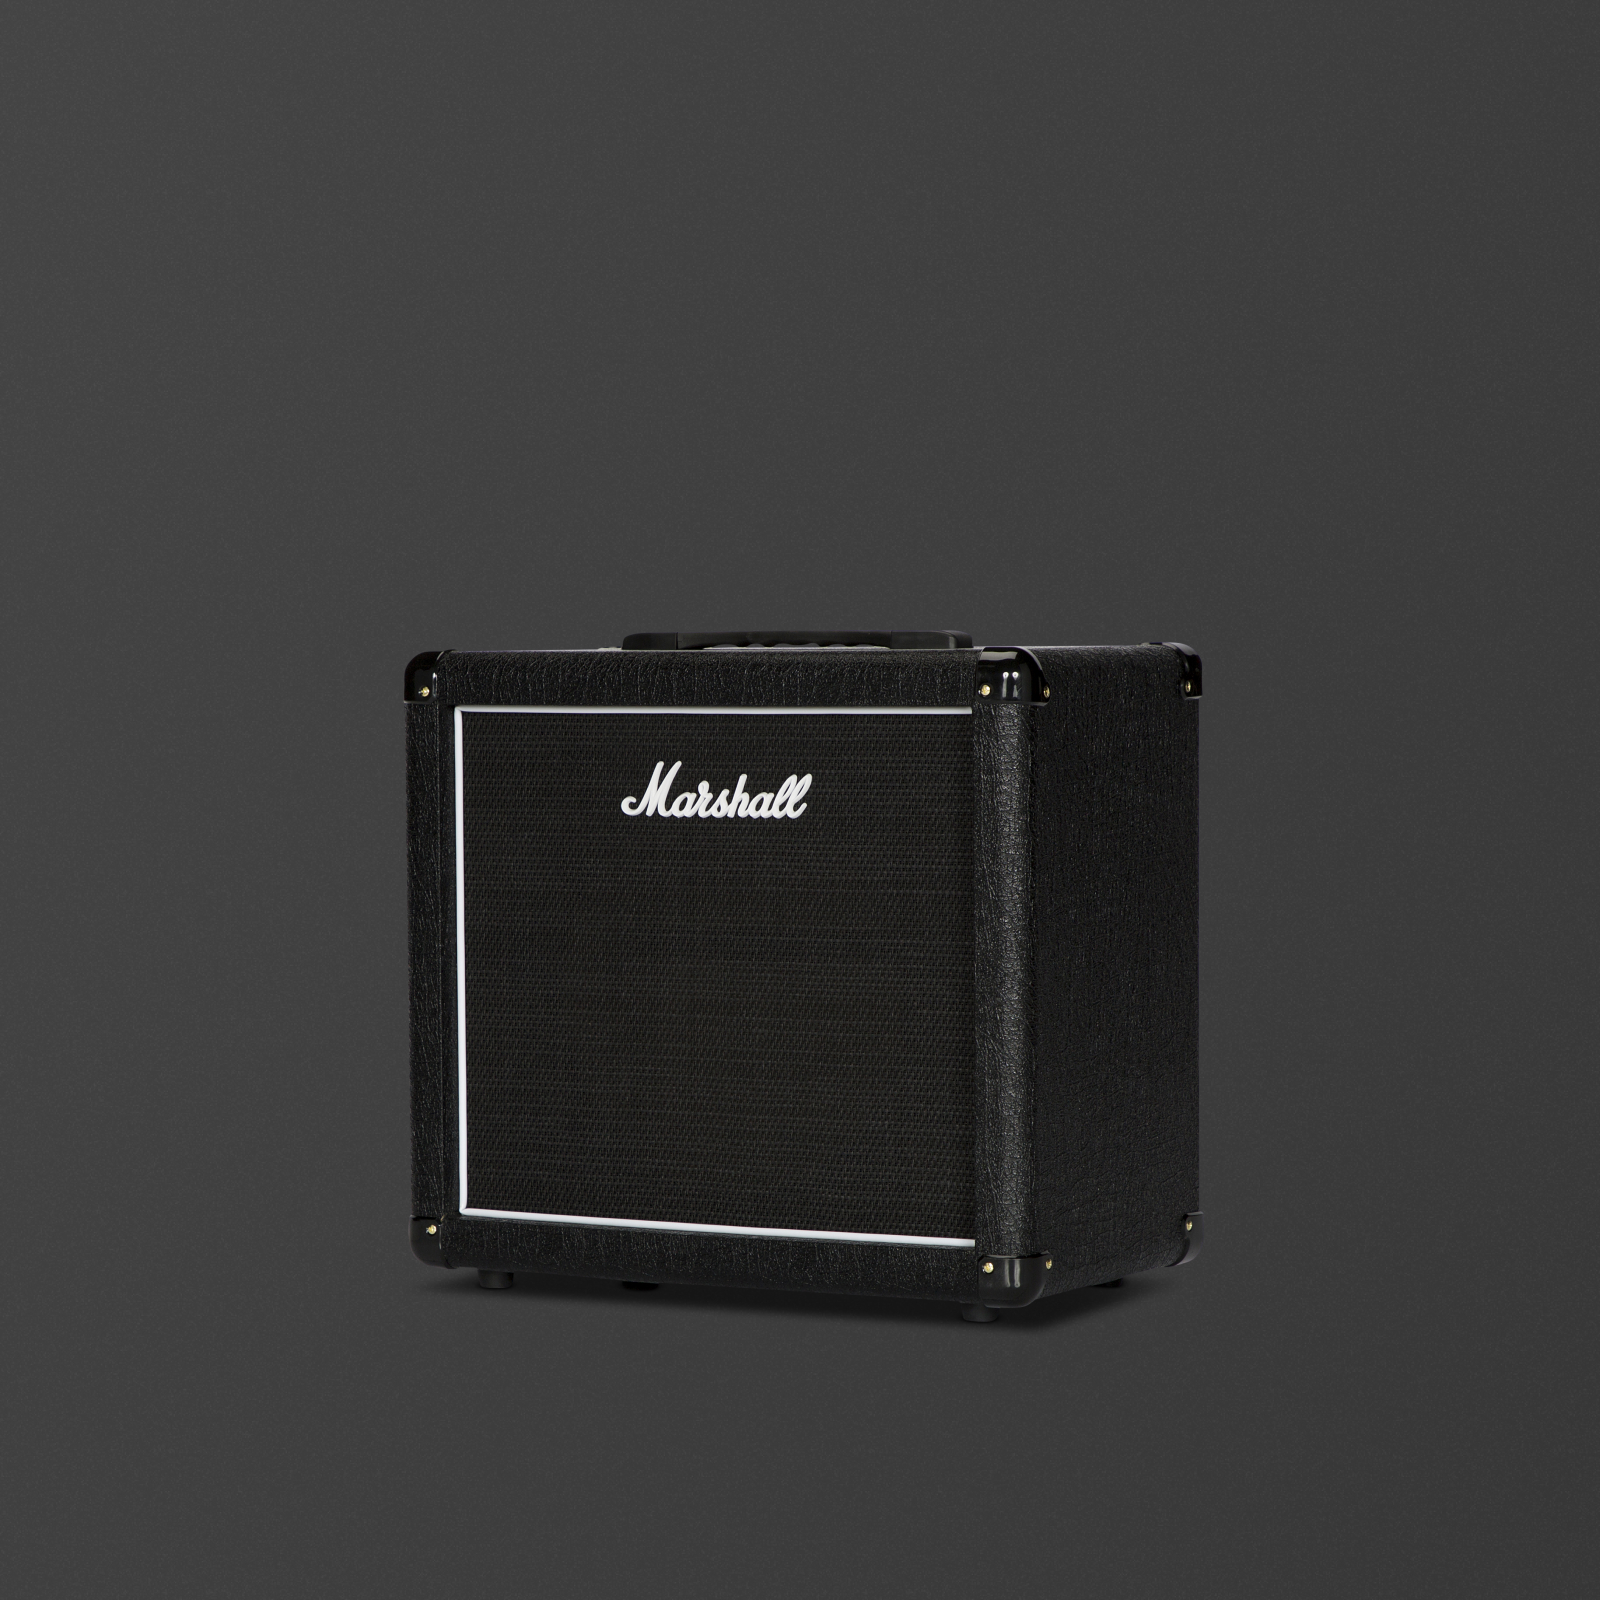 Marshall's MX112 black cabinet. 